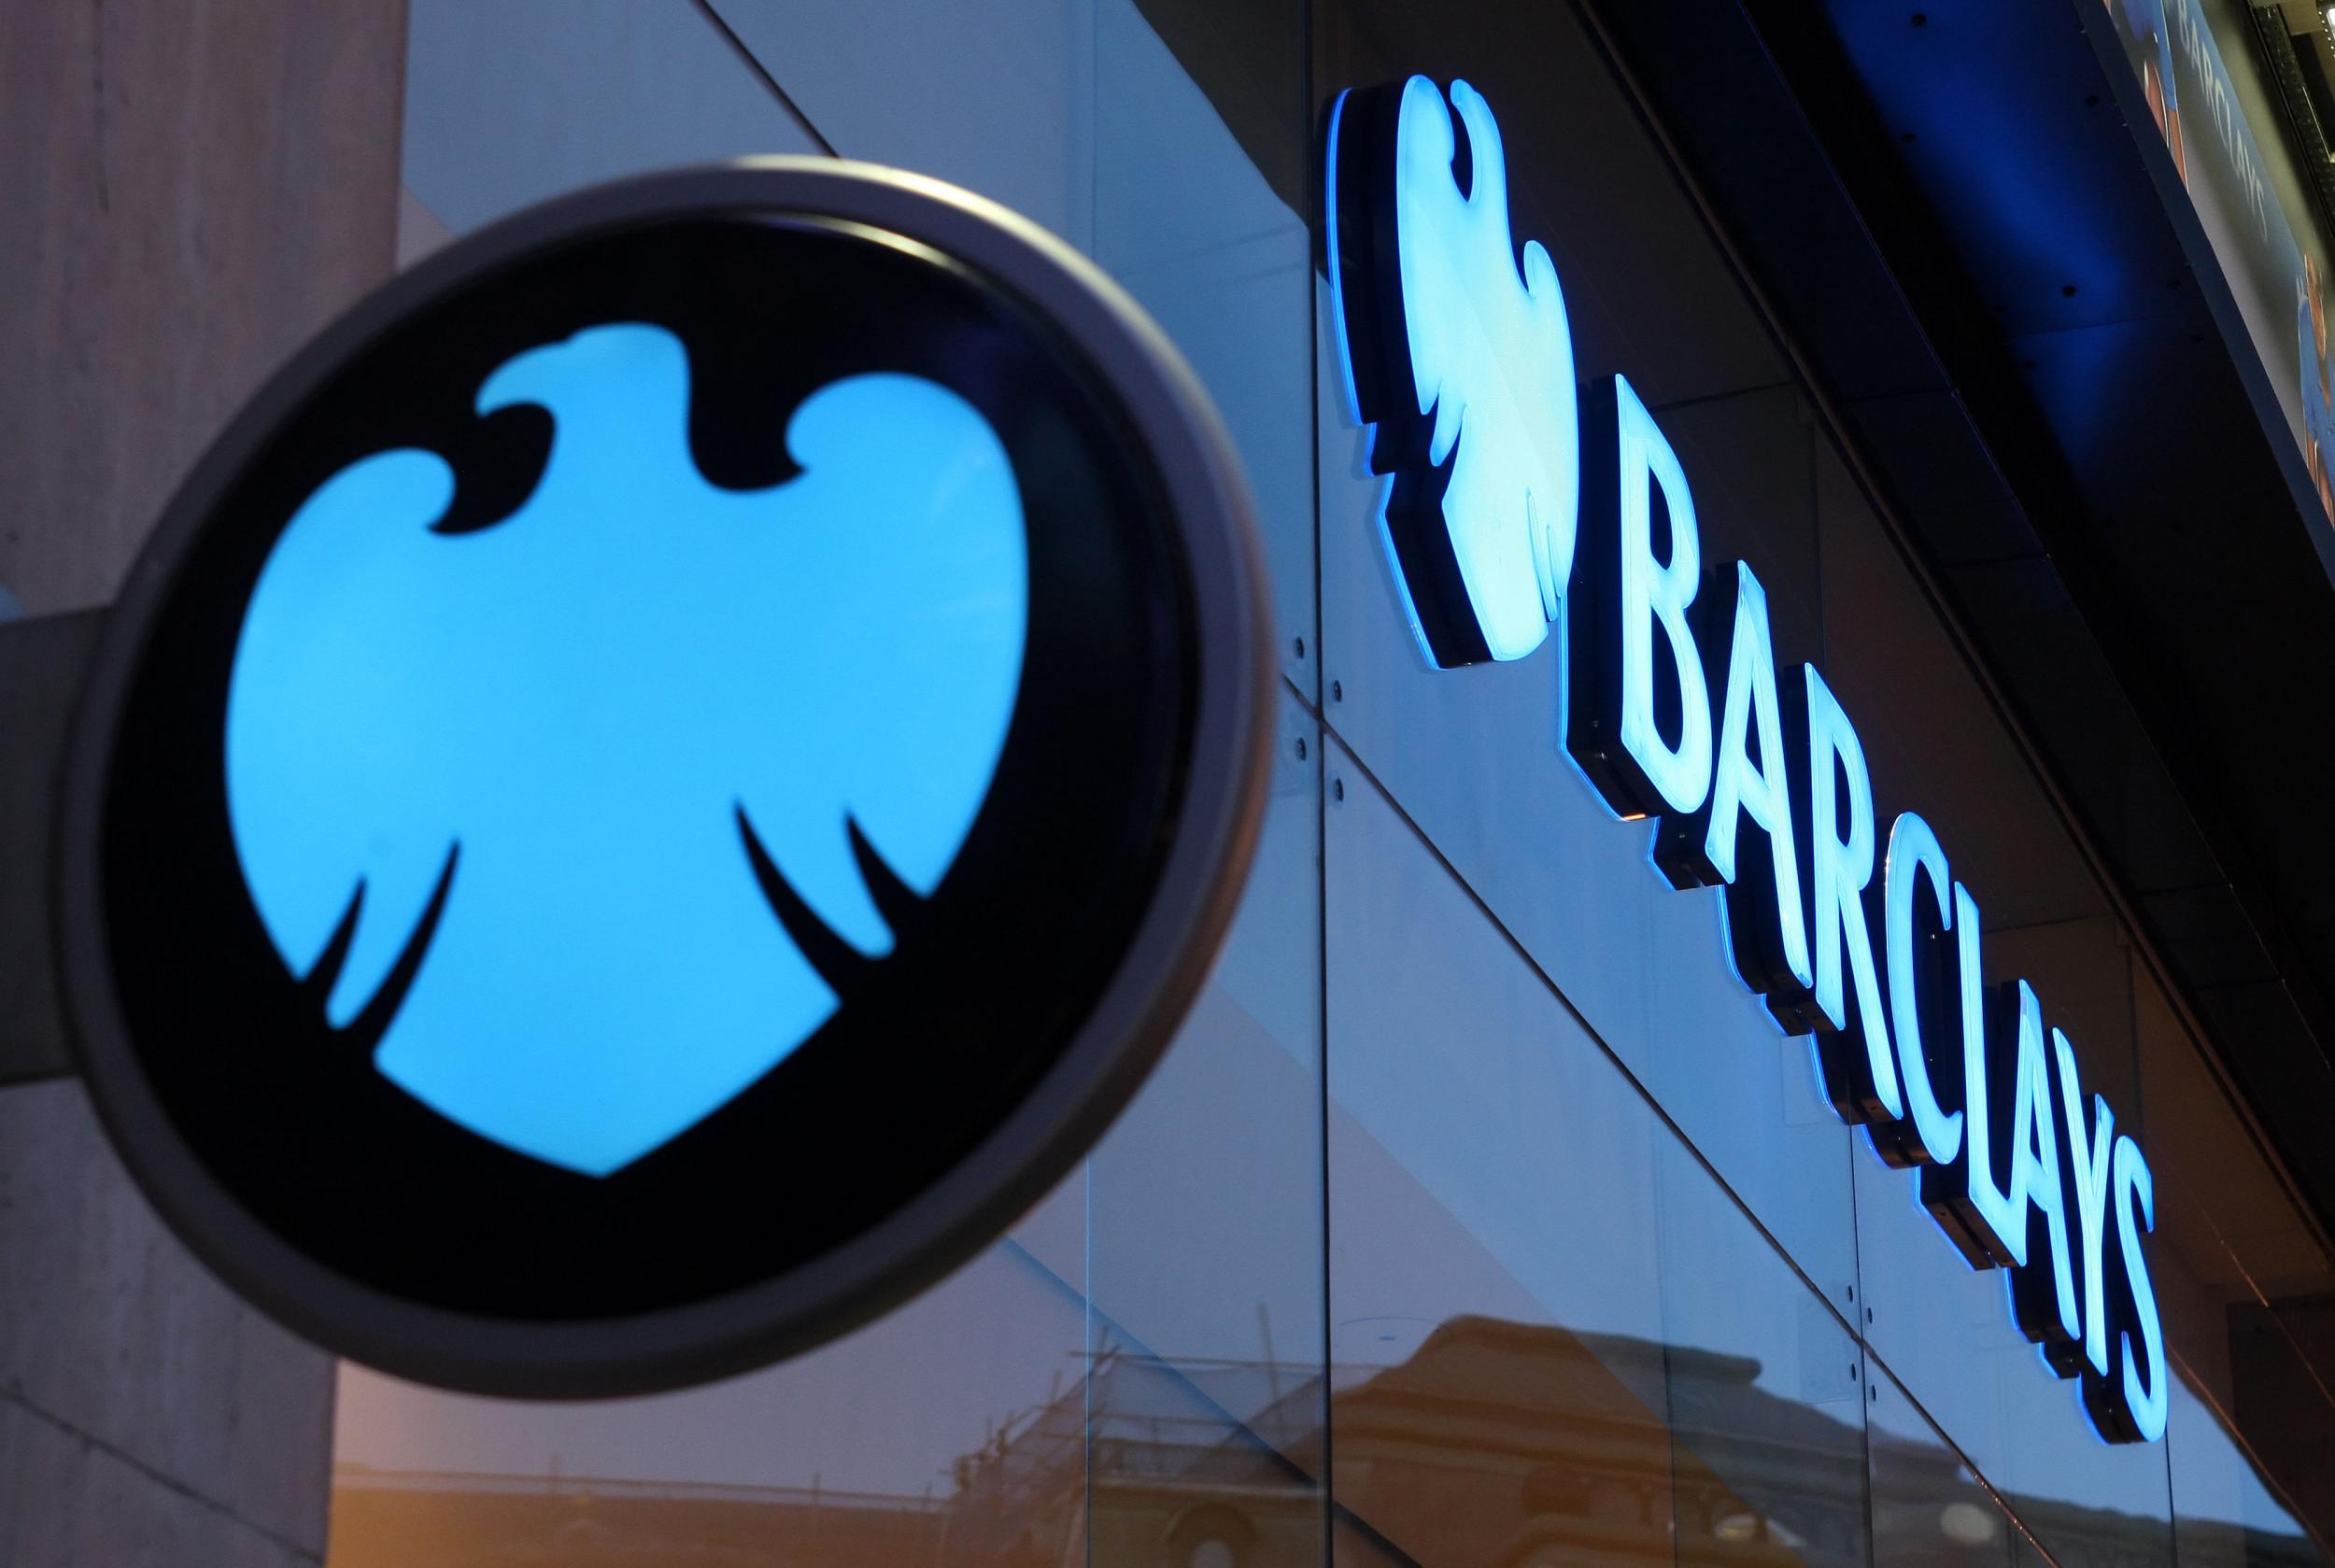 Barclays is under pressure from activist investor Ed Bramson